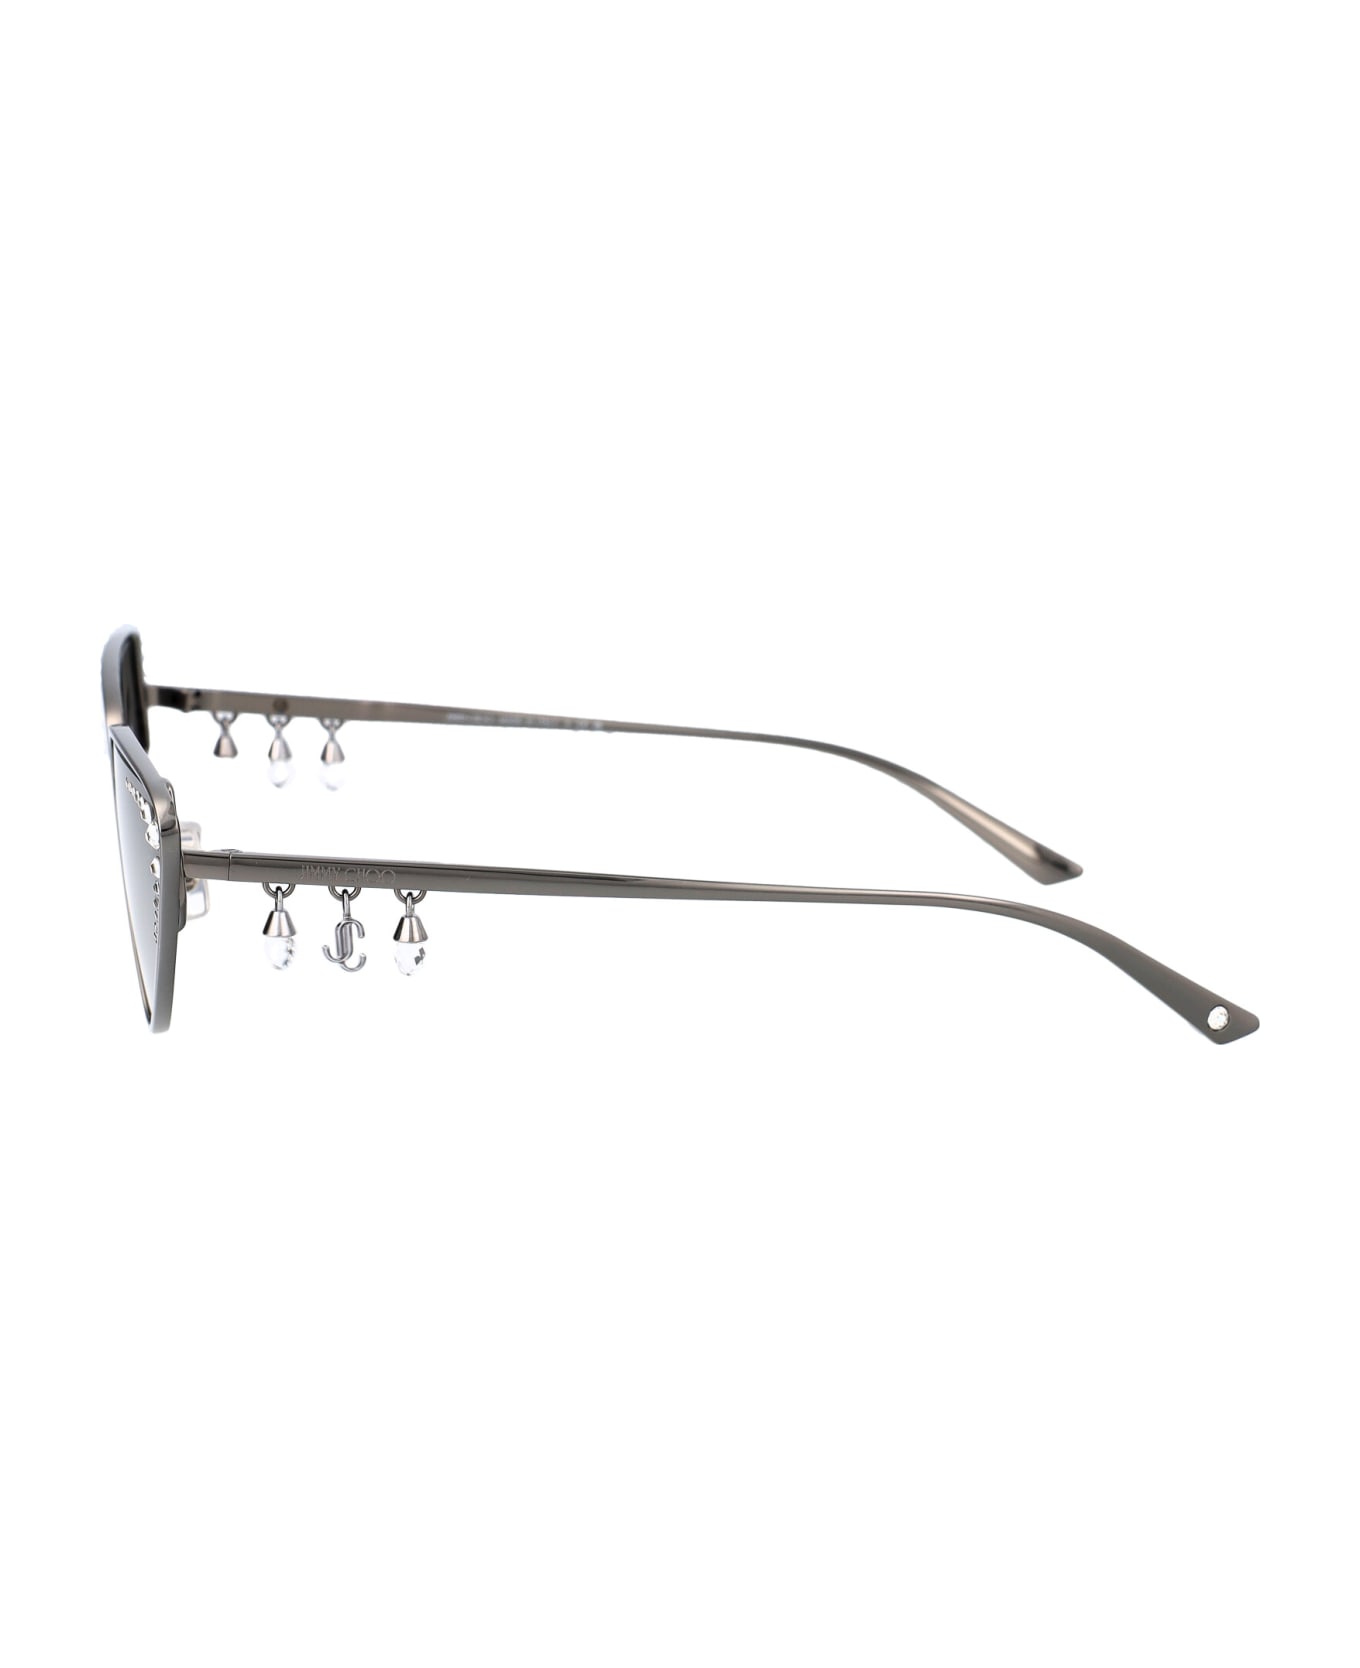 Jimmy Choo Eyewear 0jc4001b Sunglasses - 300487 Gunmetal